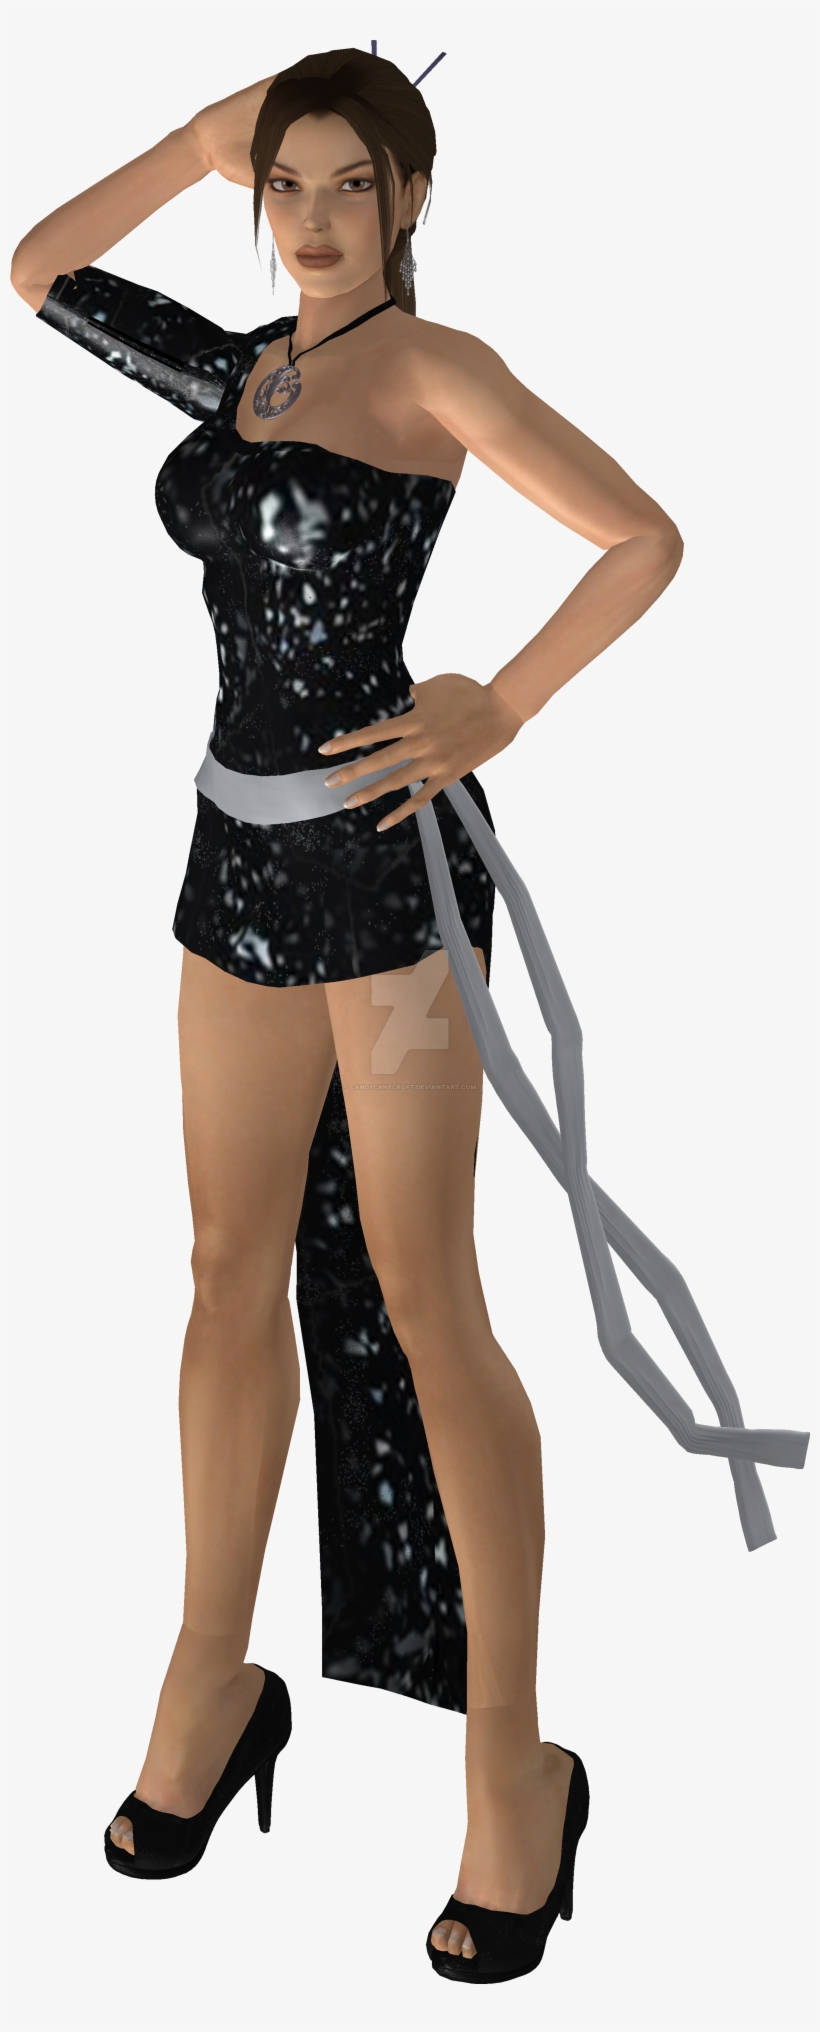 Lara Croft Png - Lara Croft Dress Png, transparent png #1624351